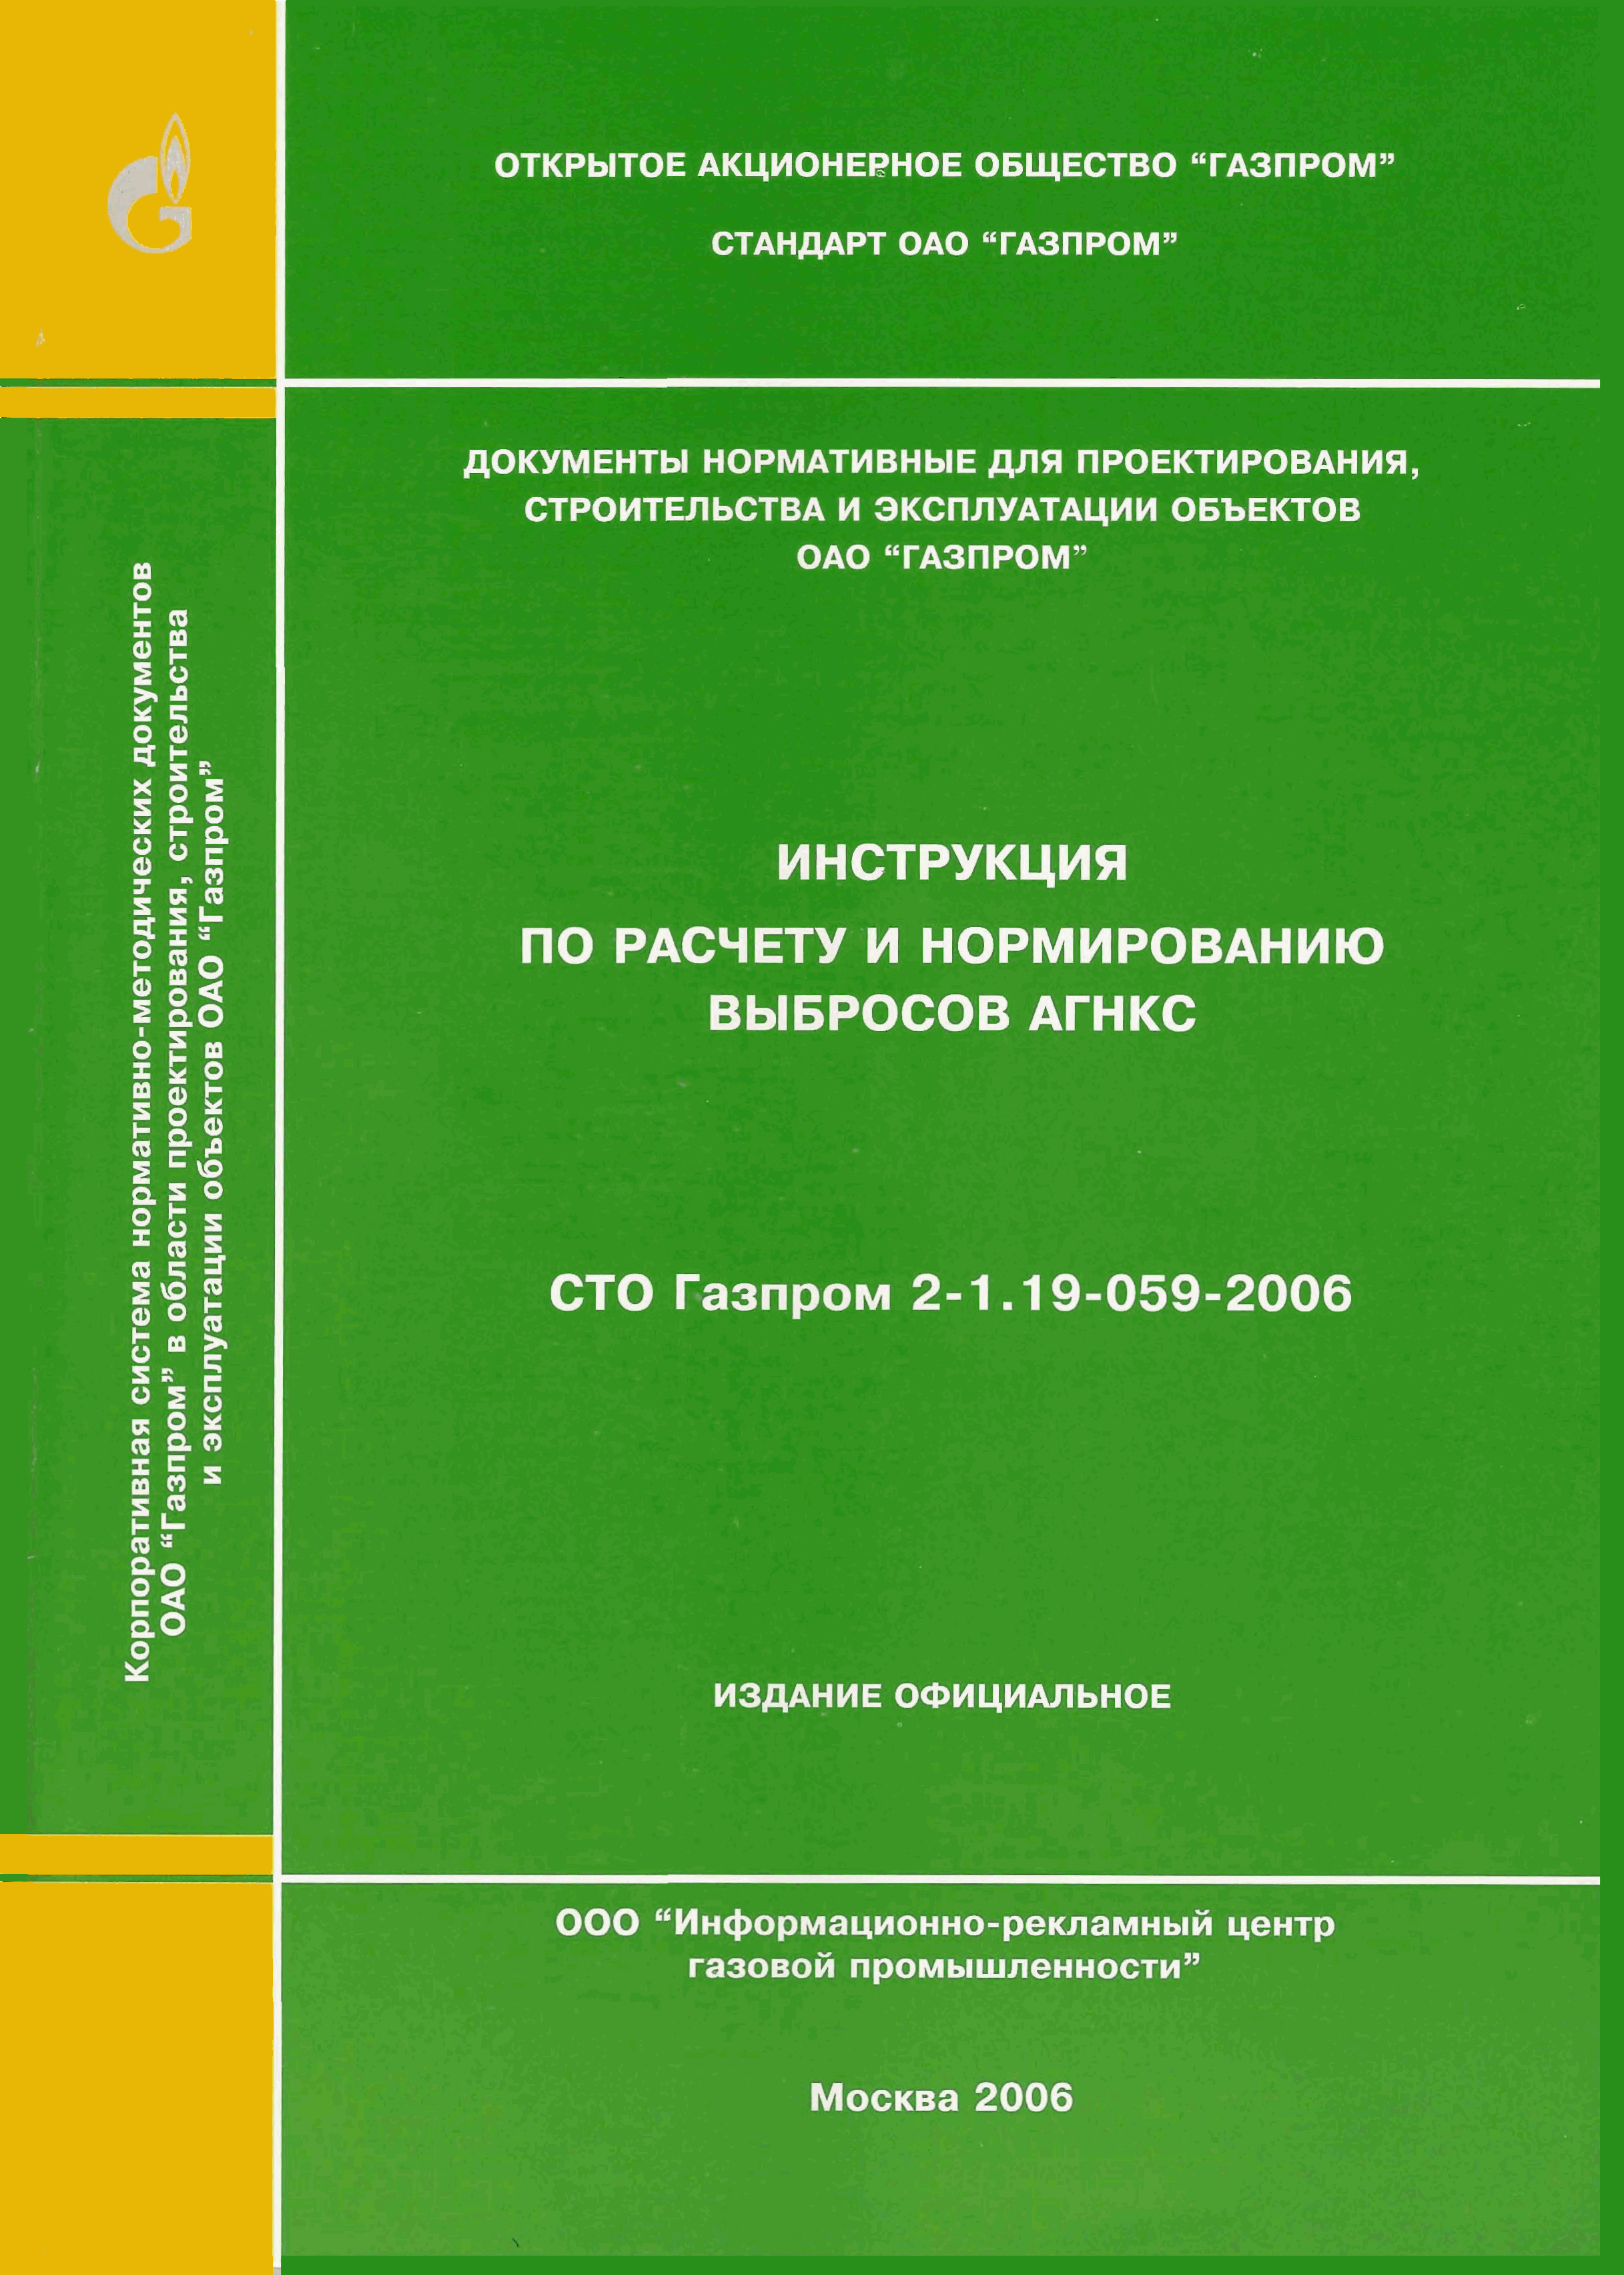 СТО Газпром 2-1.19-059-2006